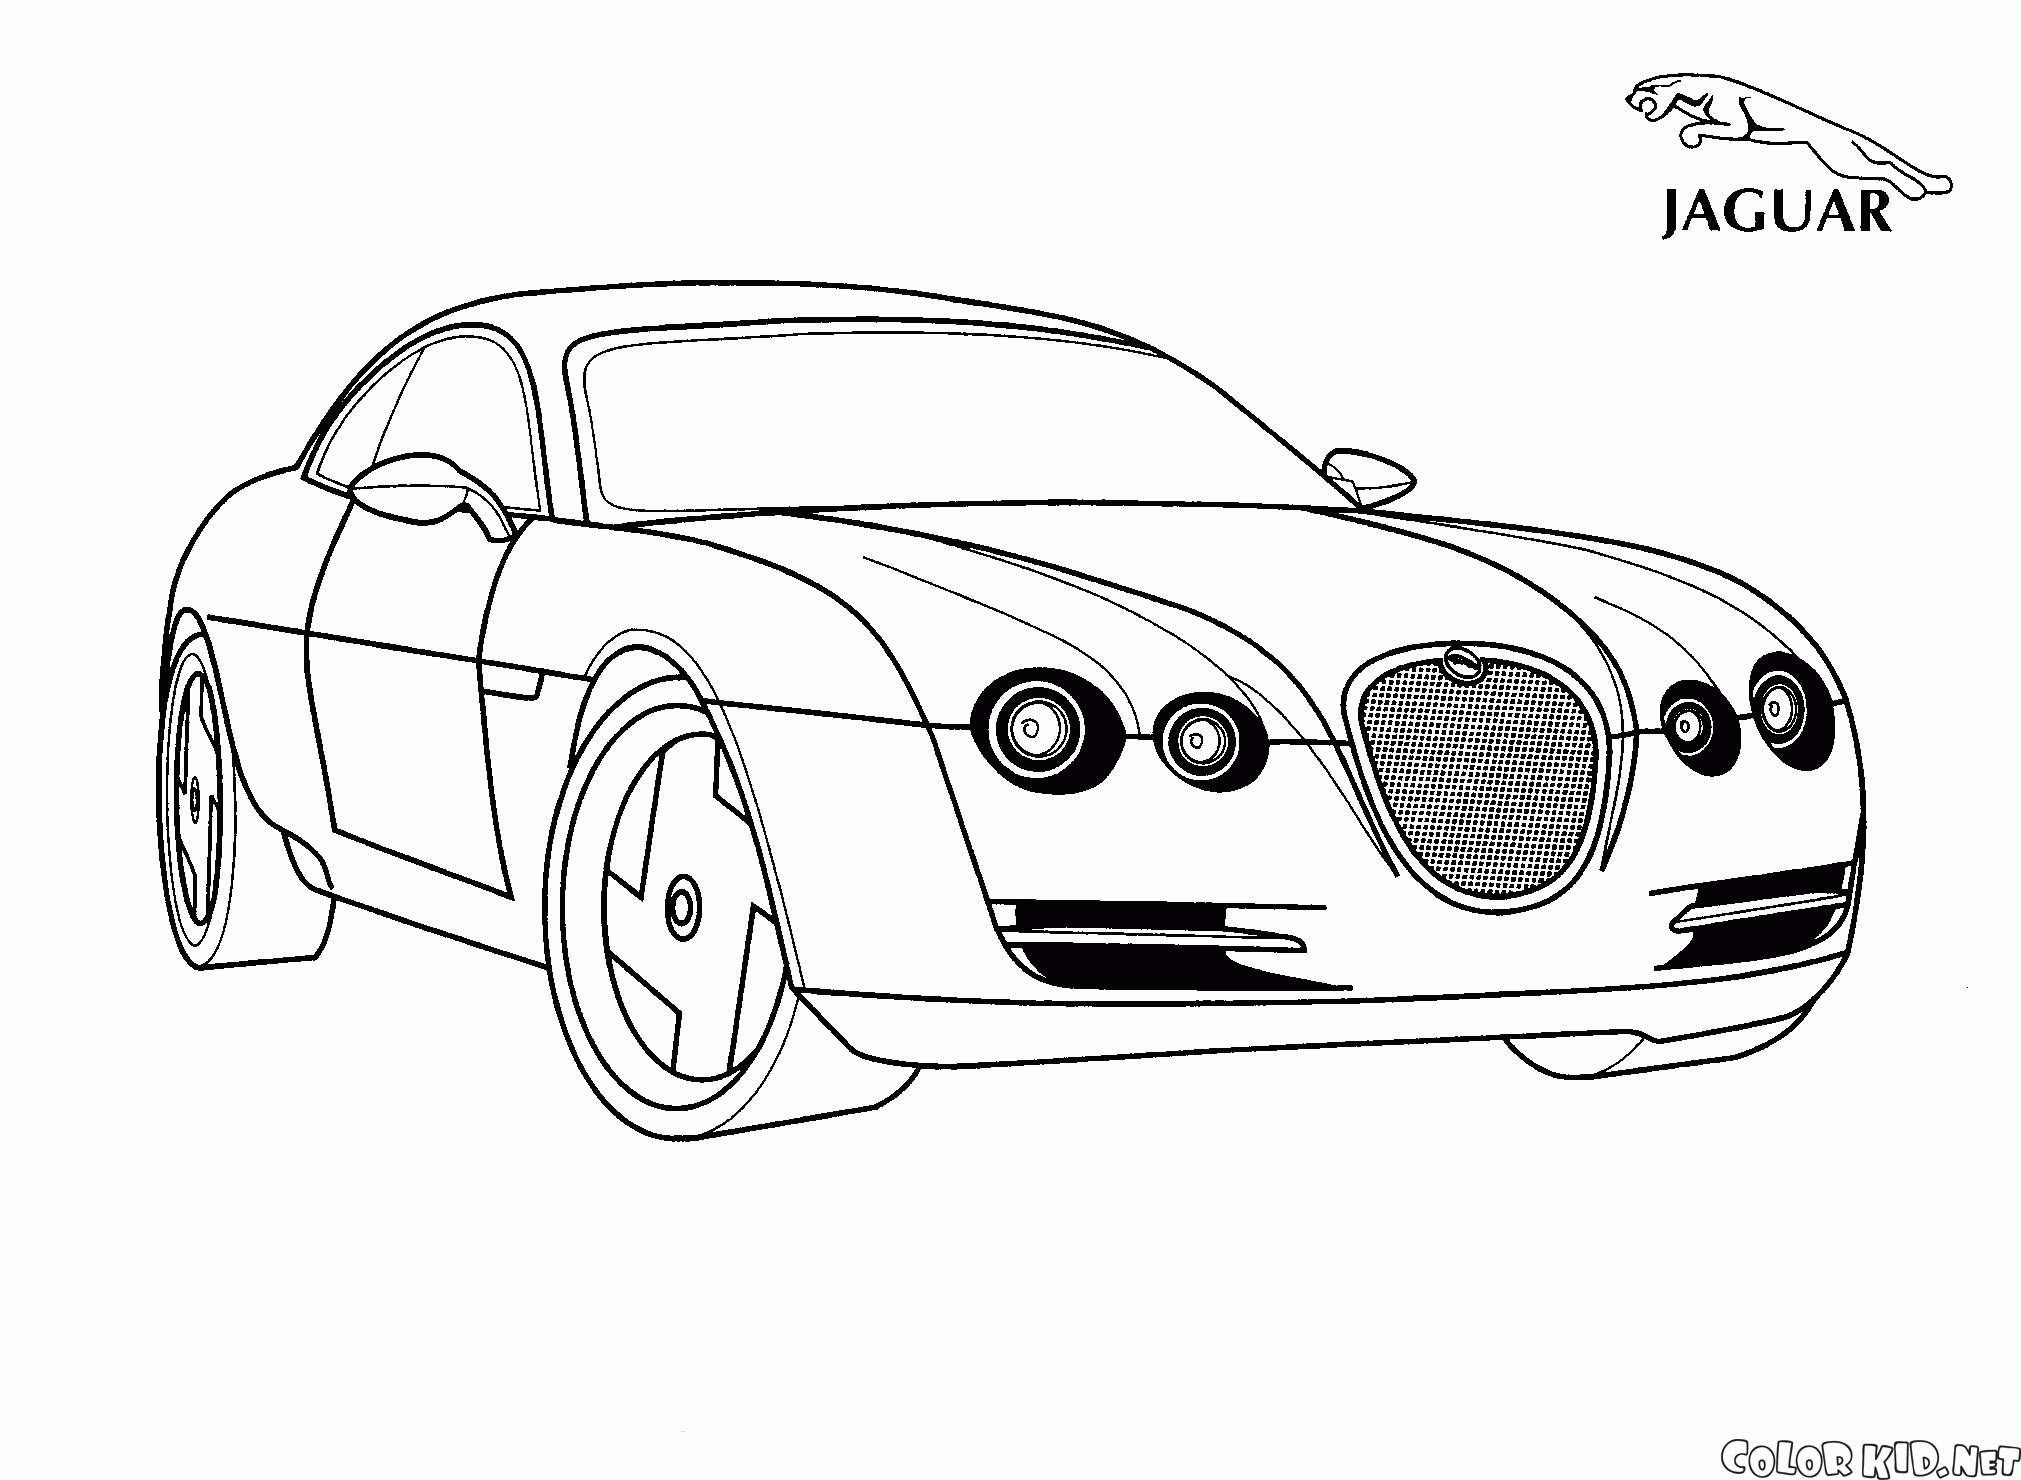 Jaguar (Reino Unido)